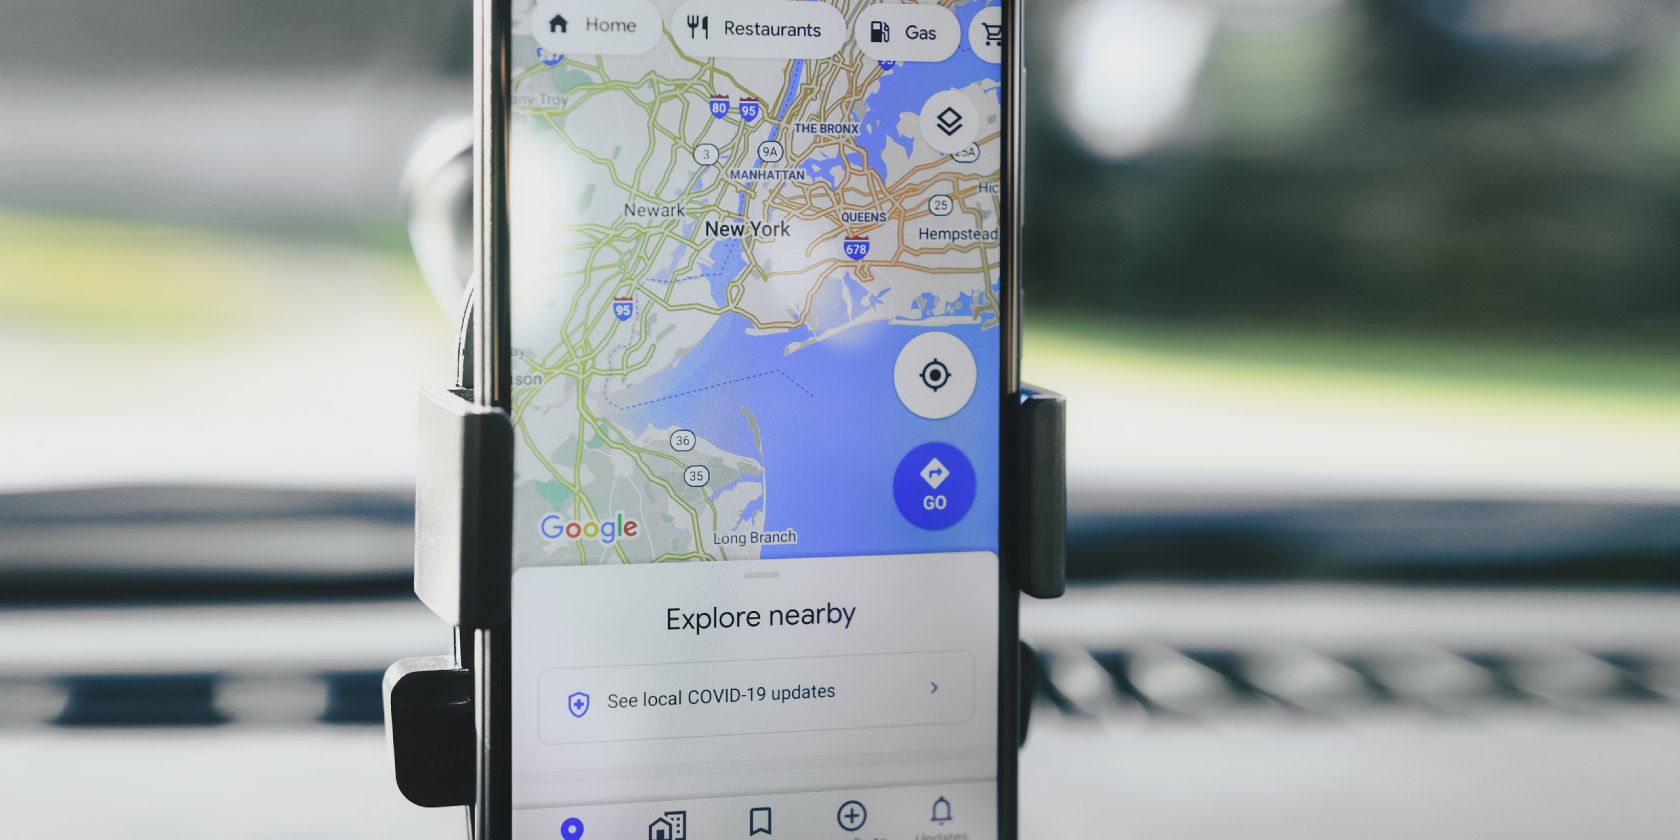 Google Maps Navigation While Driving